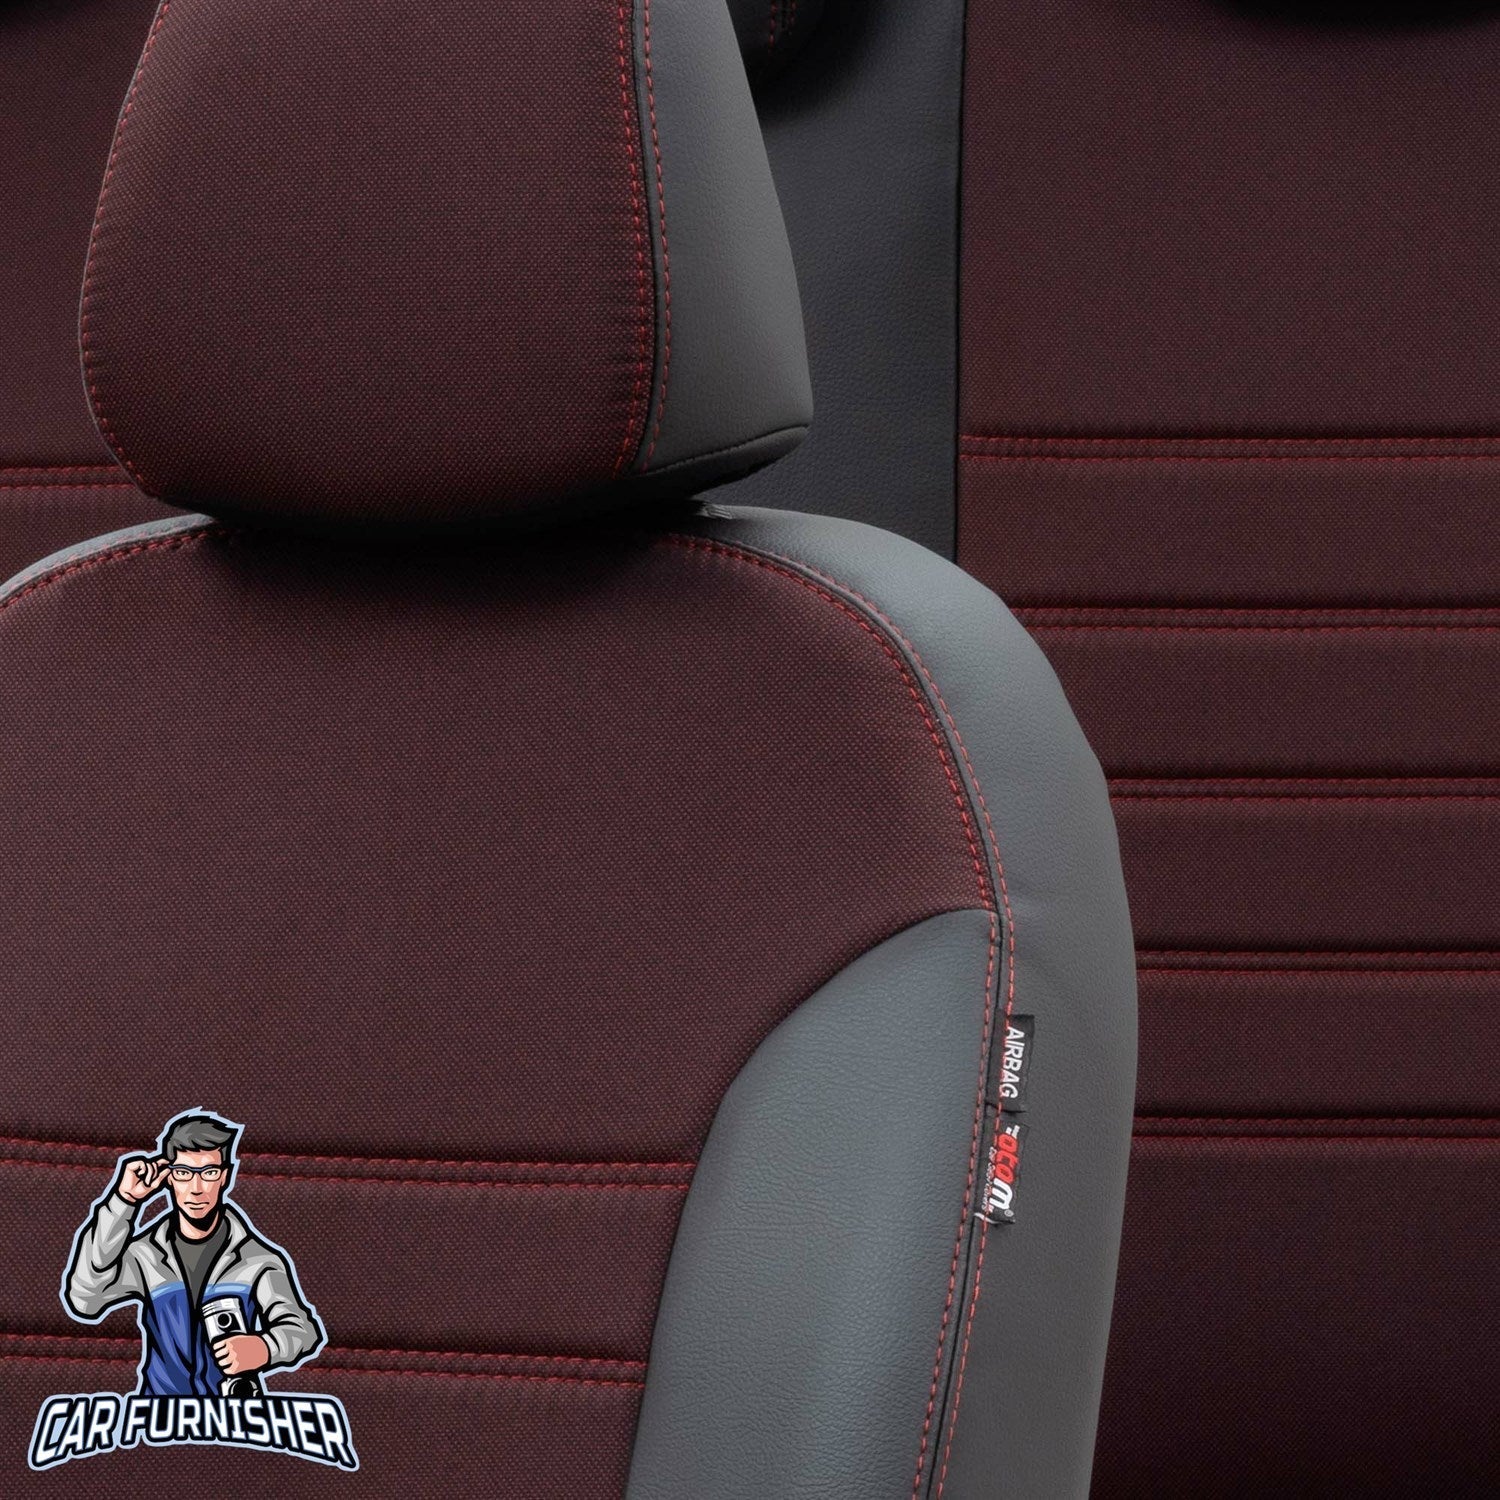 Fiat Doblo Seat Covers Paris Leather & Jacquard Design Red Leather & Jacquard Fabric